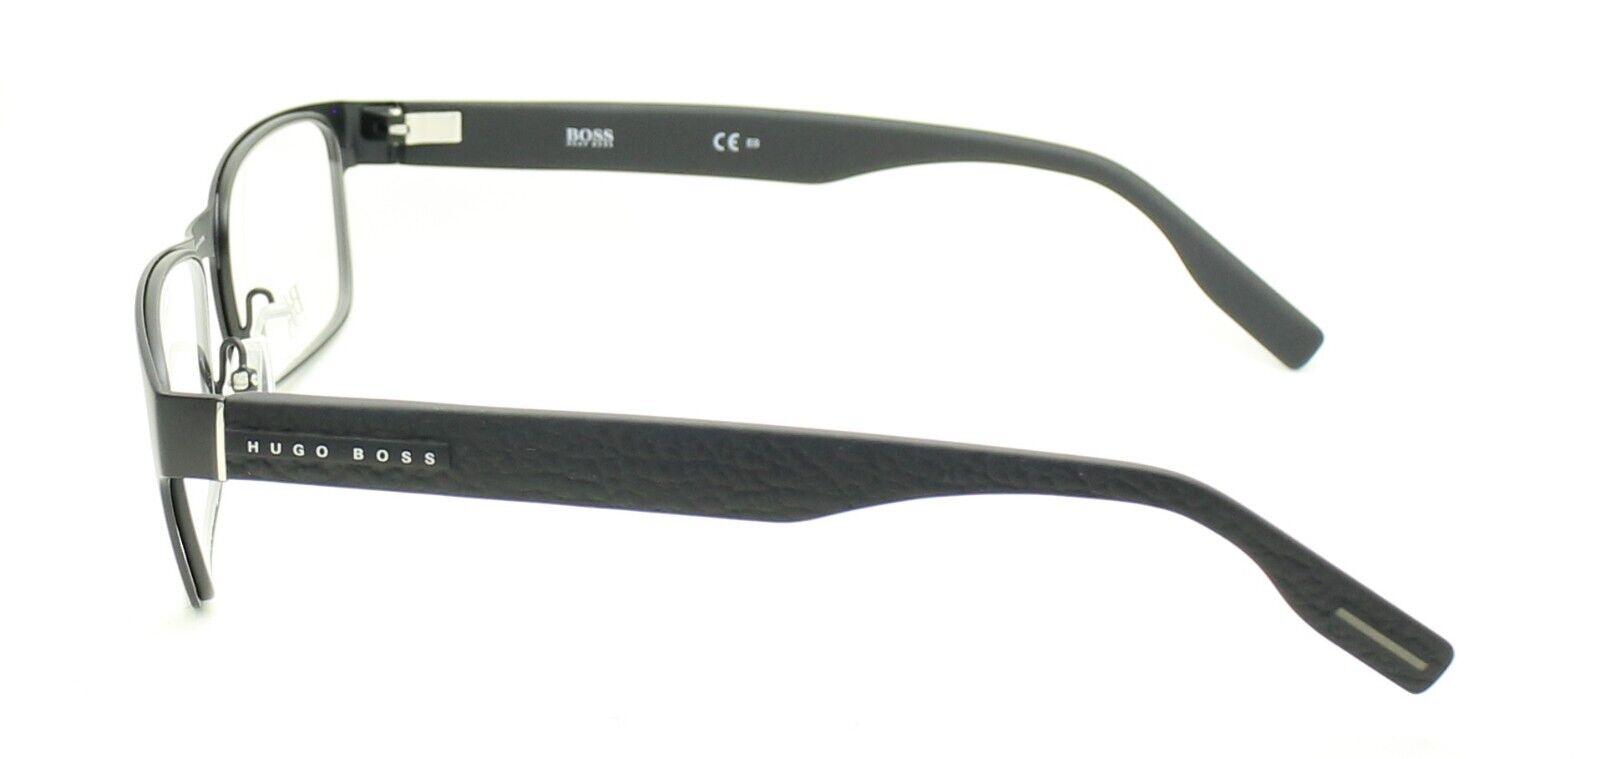 HUGO BOSS 0511/N 003 Eyewear FRAMES Glasses RX Optical Eyeglasses New Italy - Eyewear